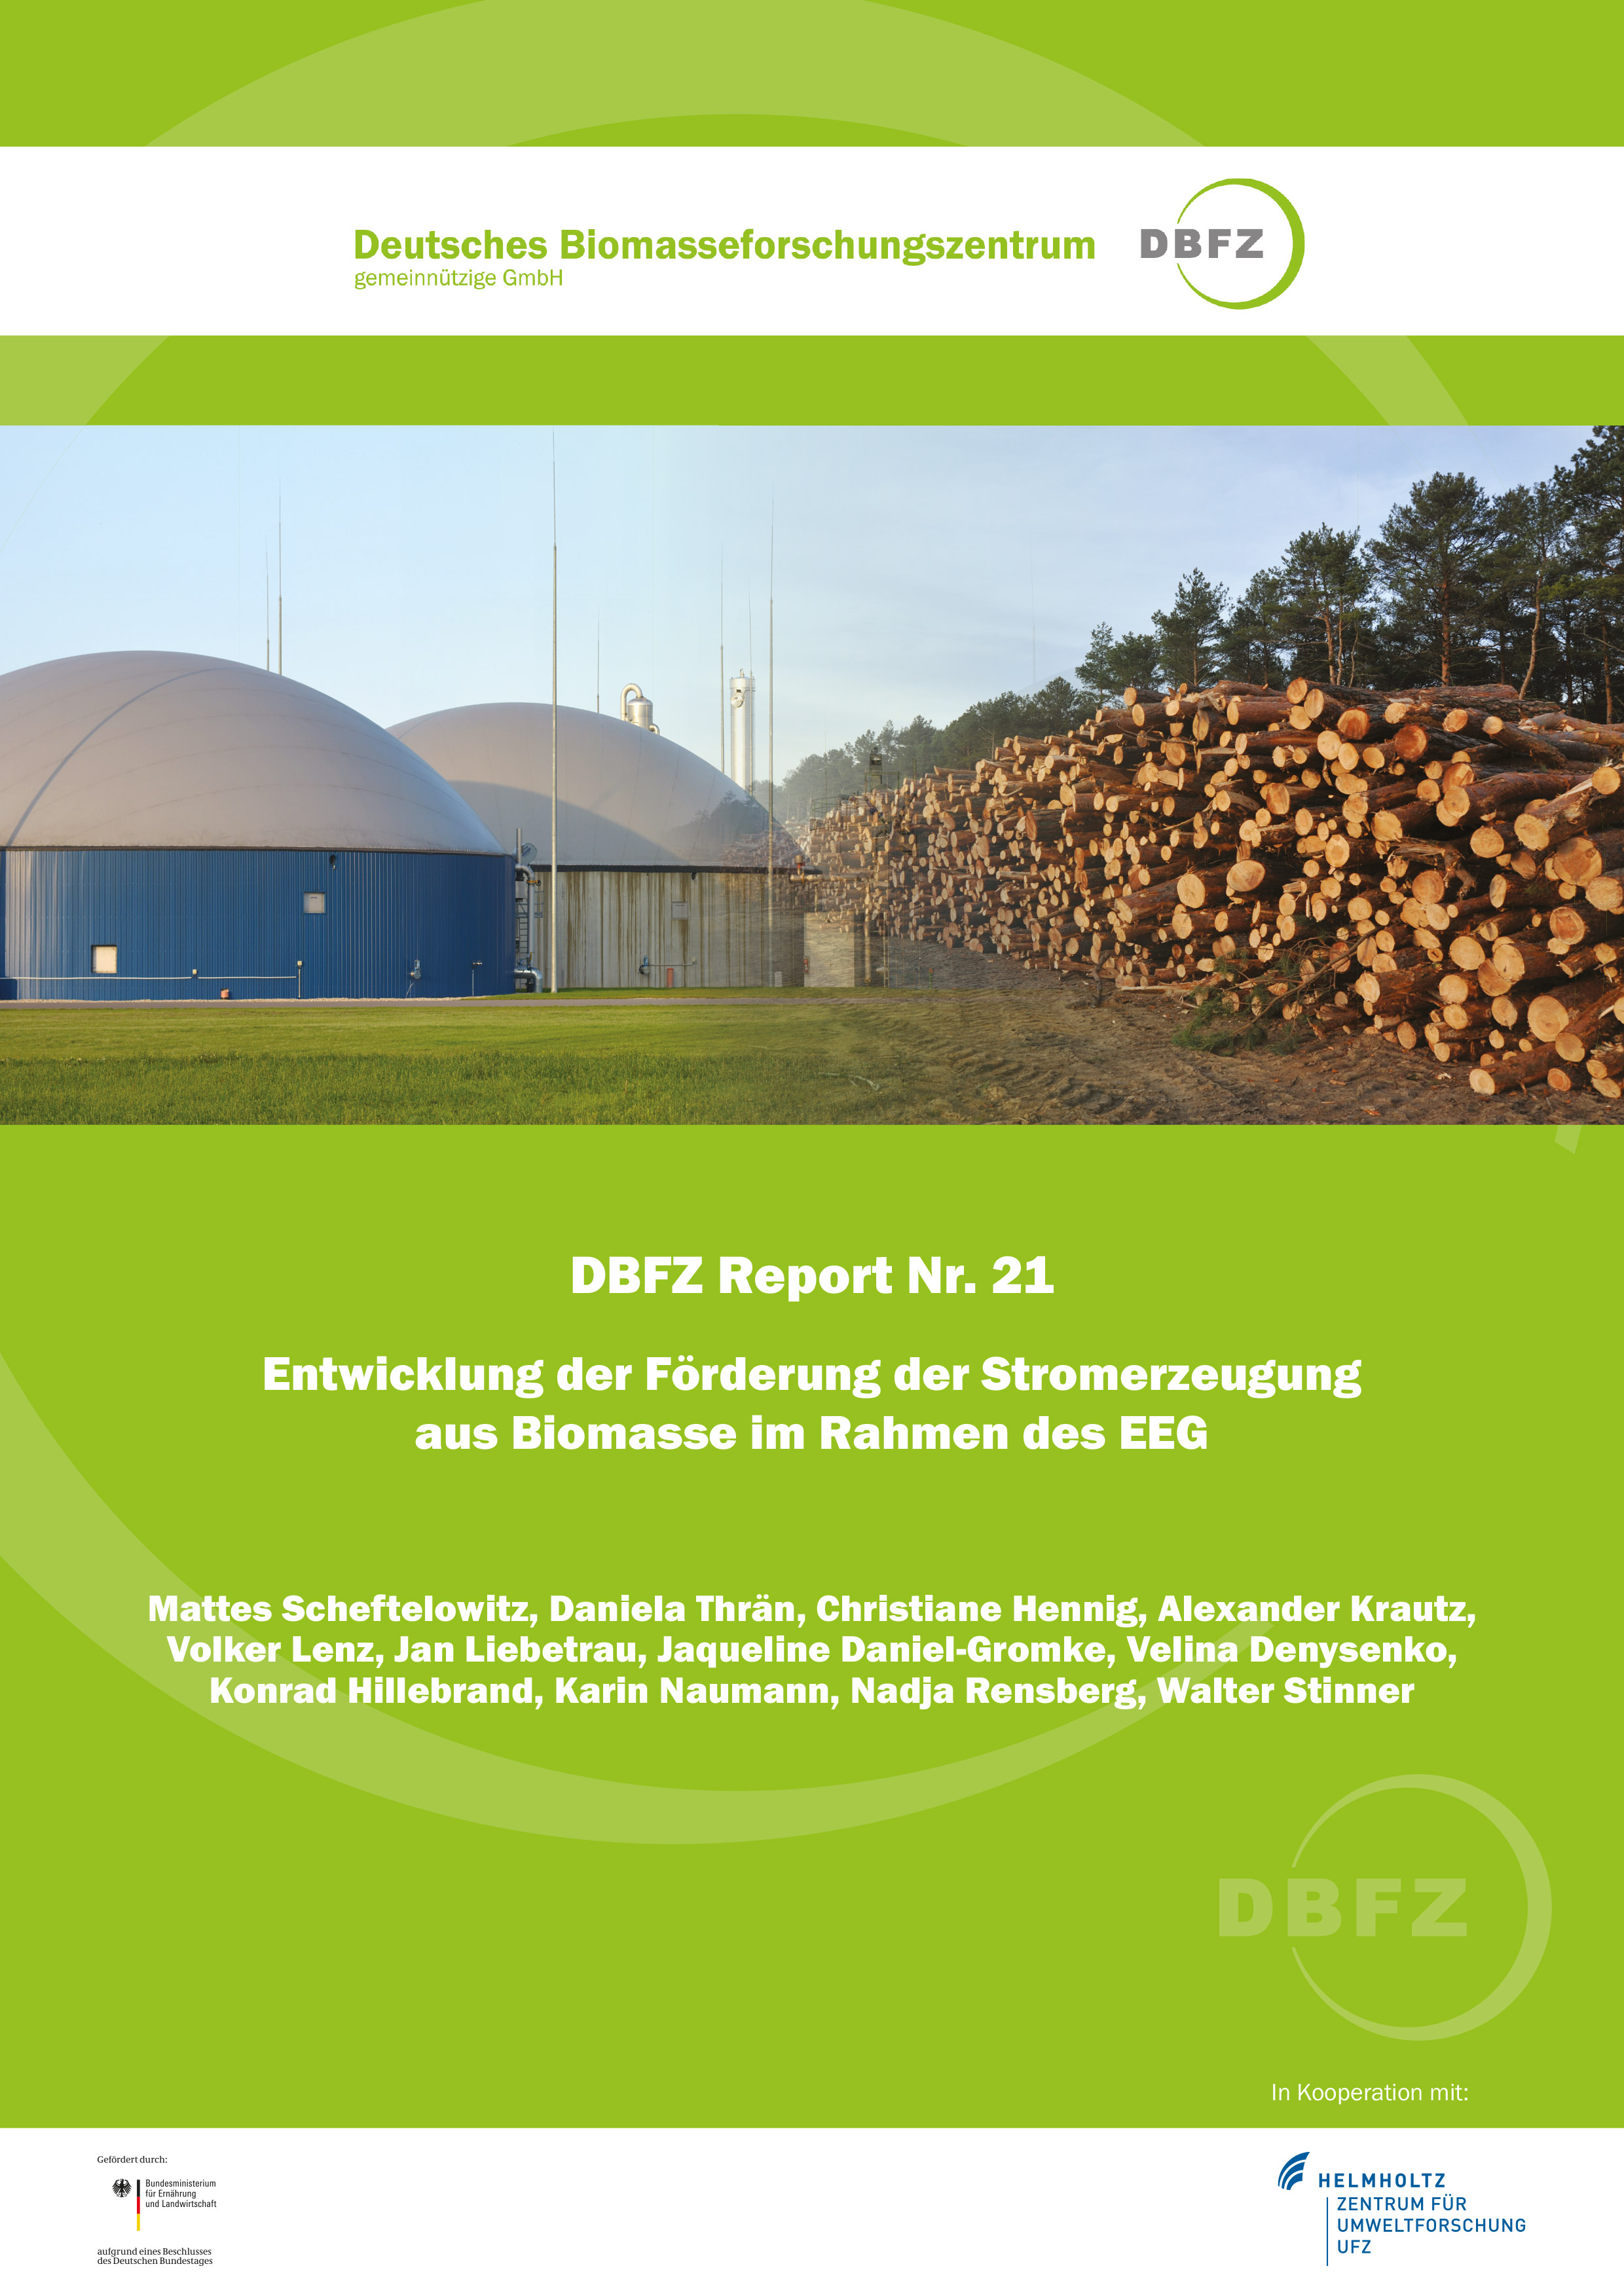 DBFZ Report No. 21